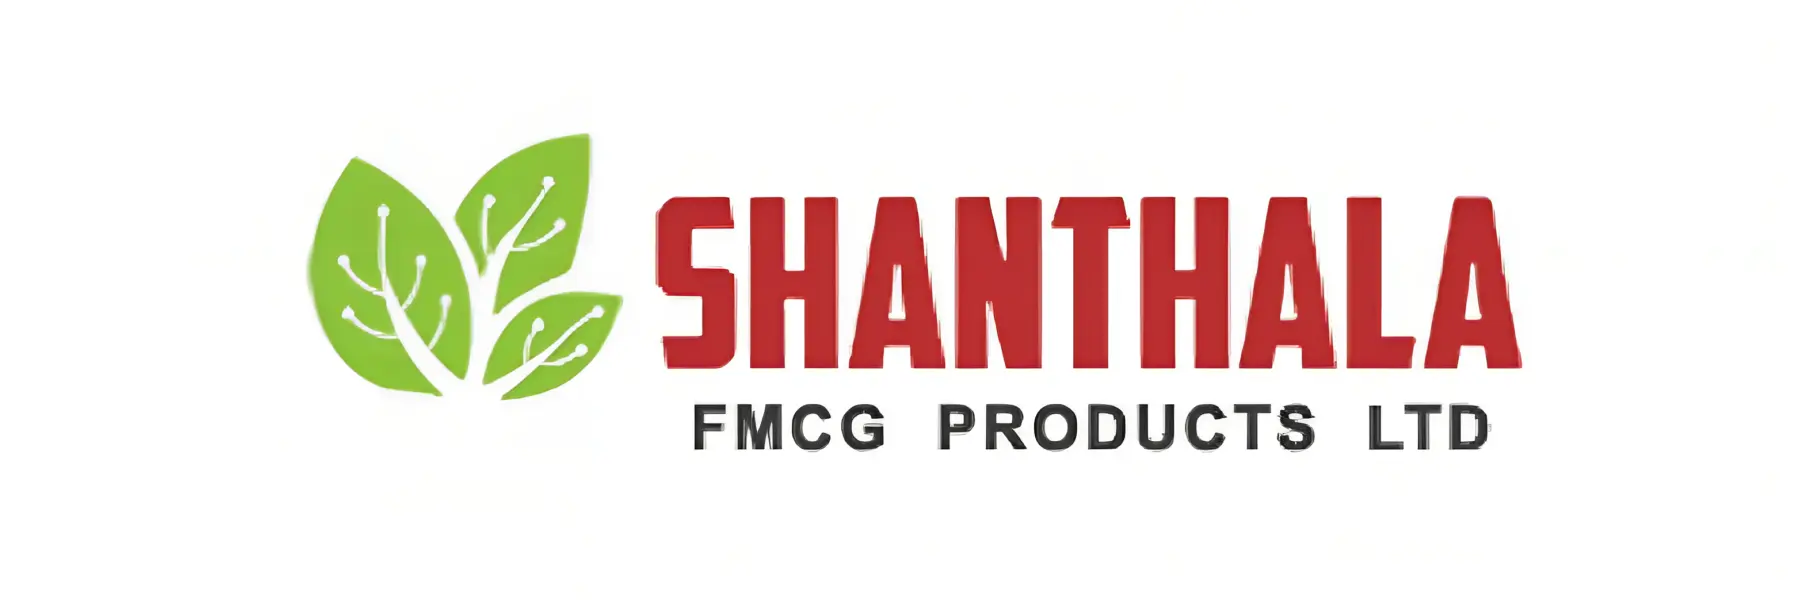 Shanthala FMCG Products Limited